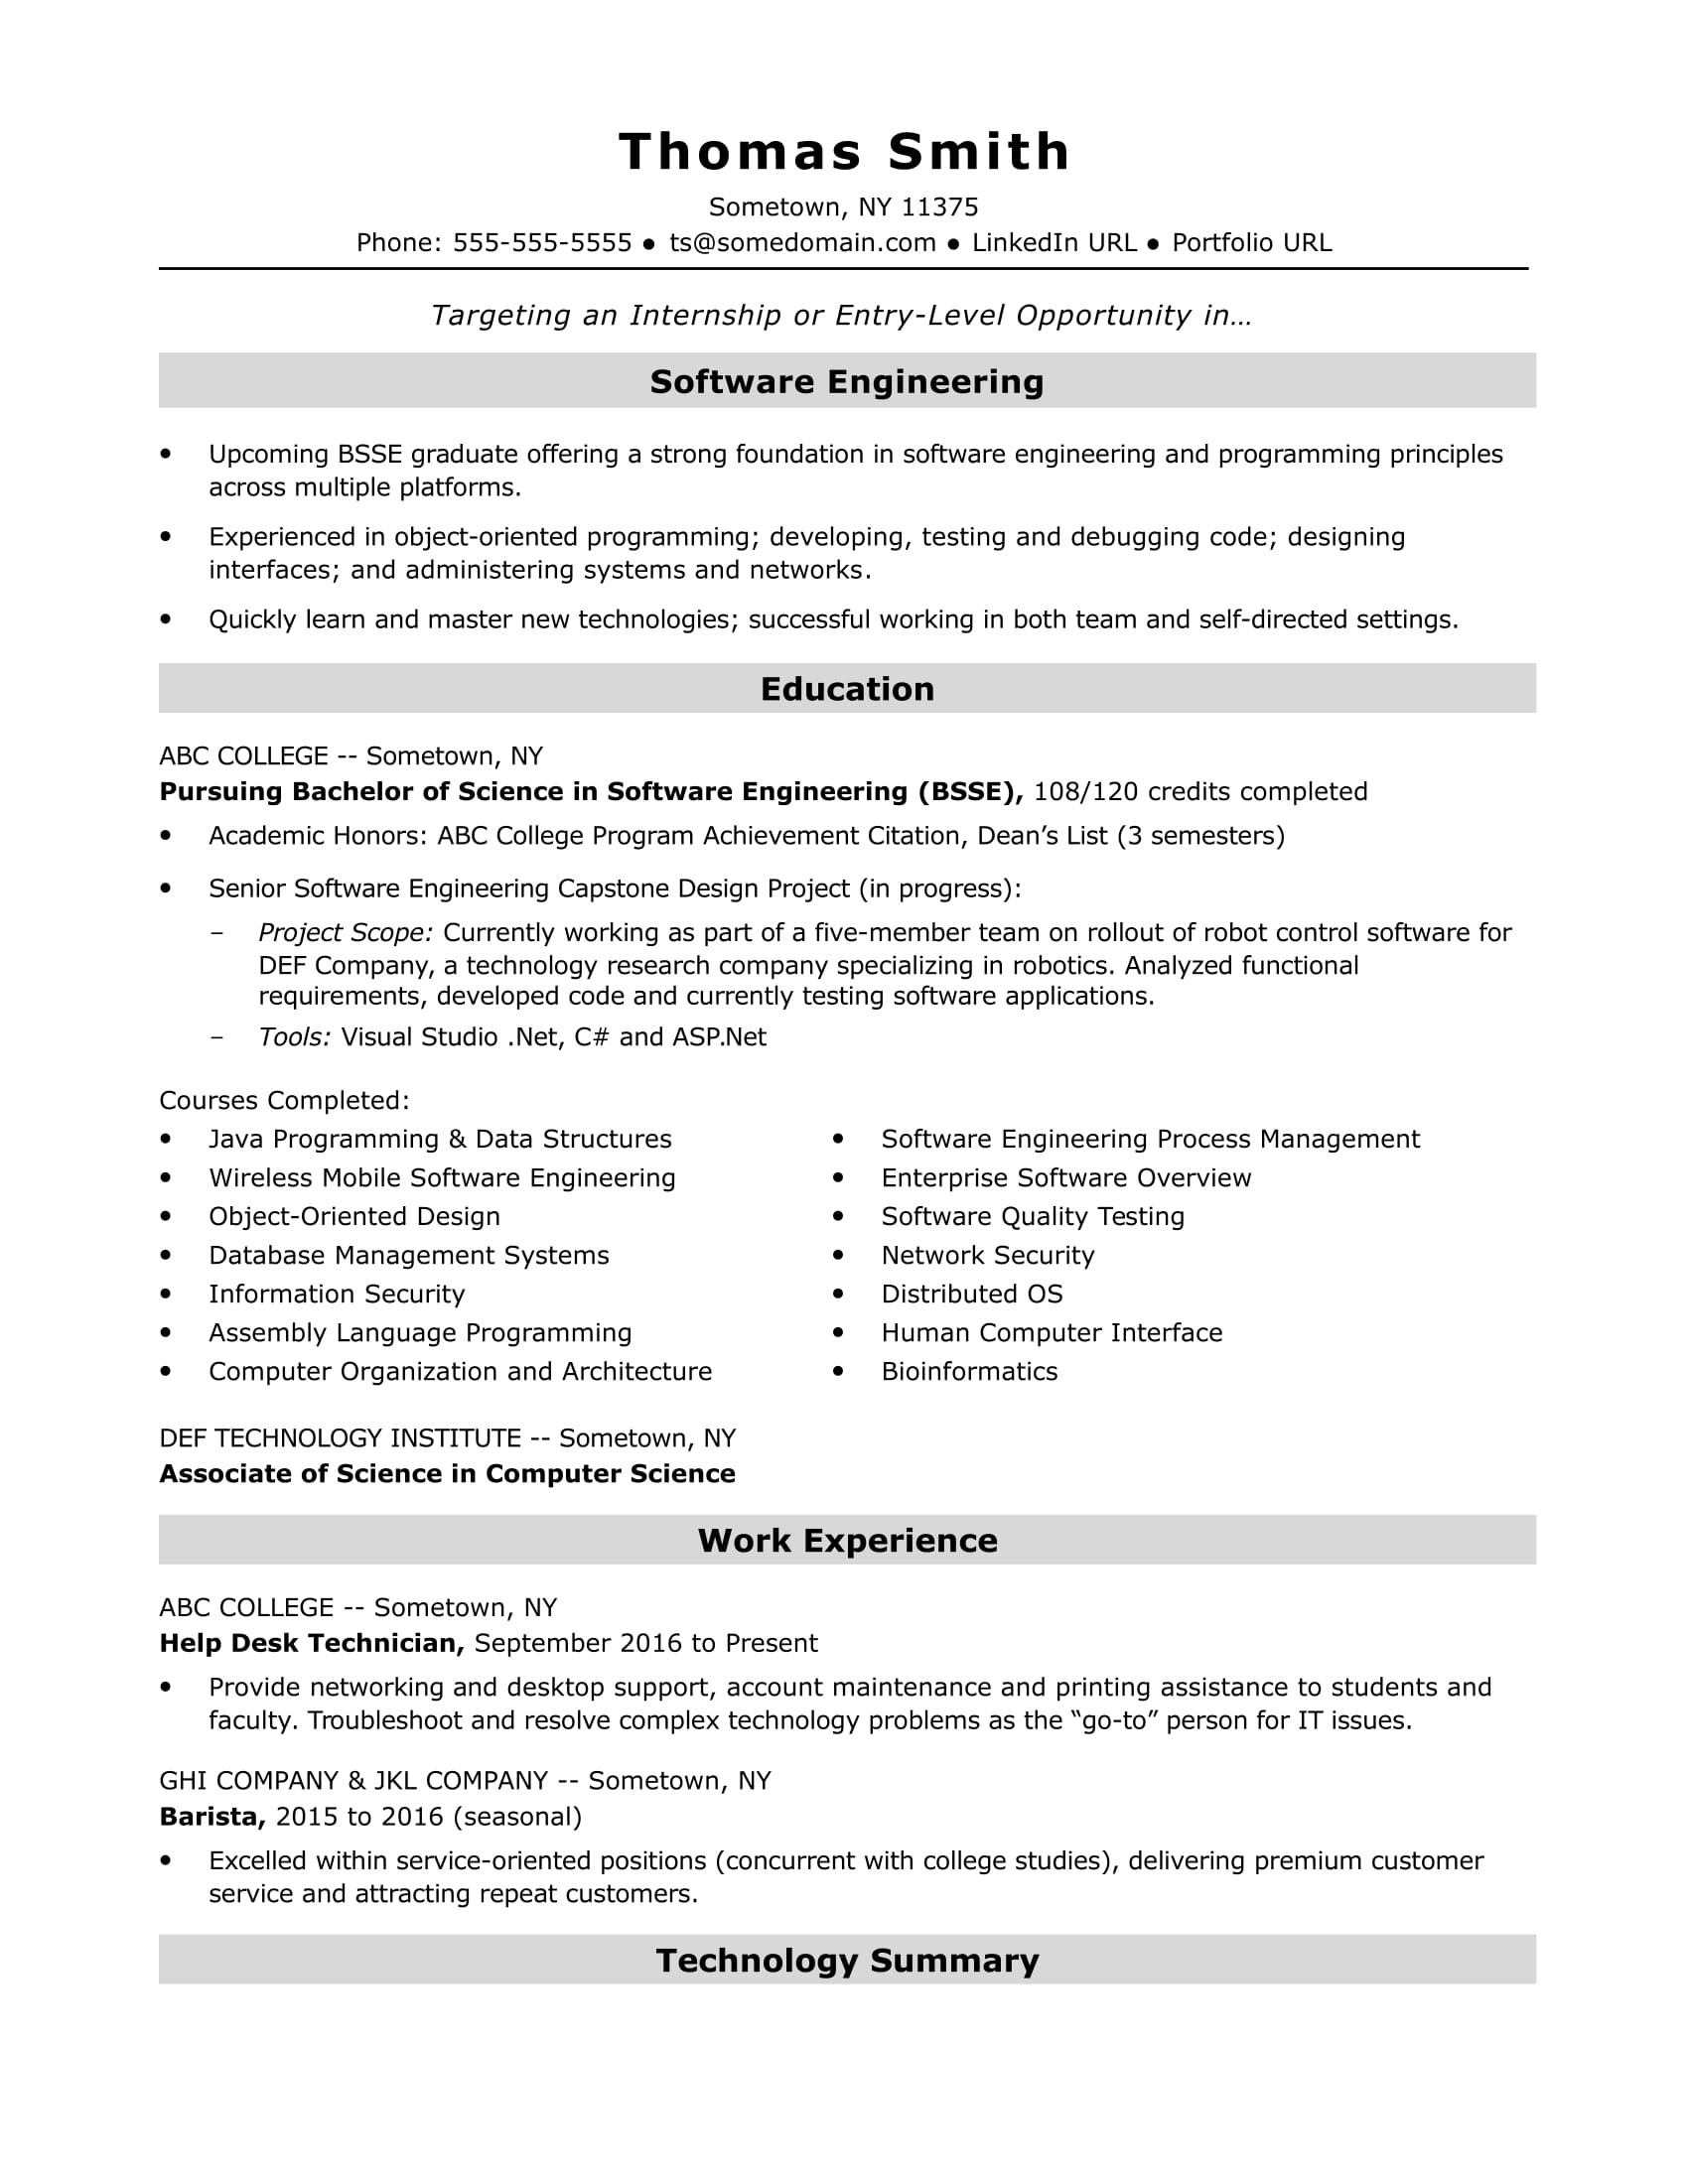 Sample Of Resume Summary for Freshers Entry-level software Engineer Resume Sample Monster.com